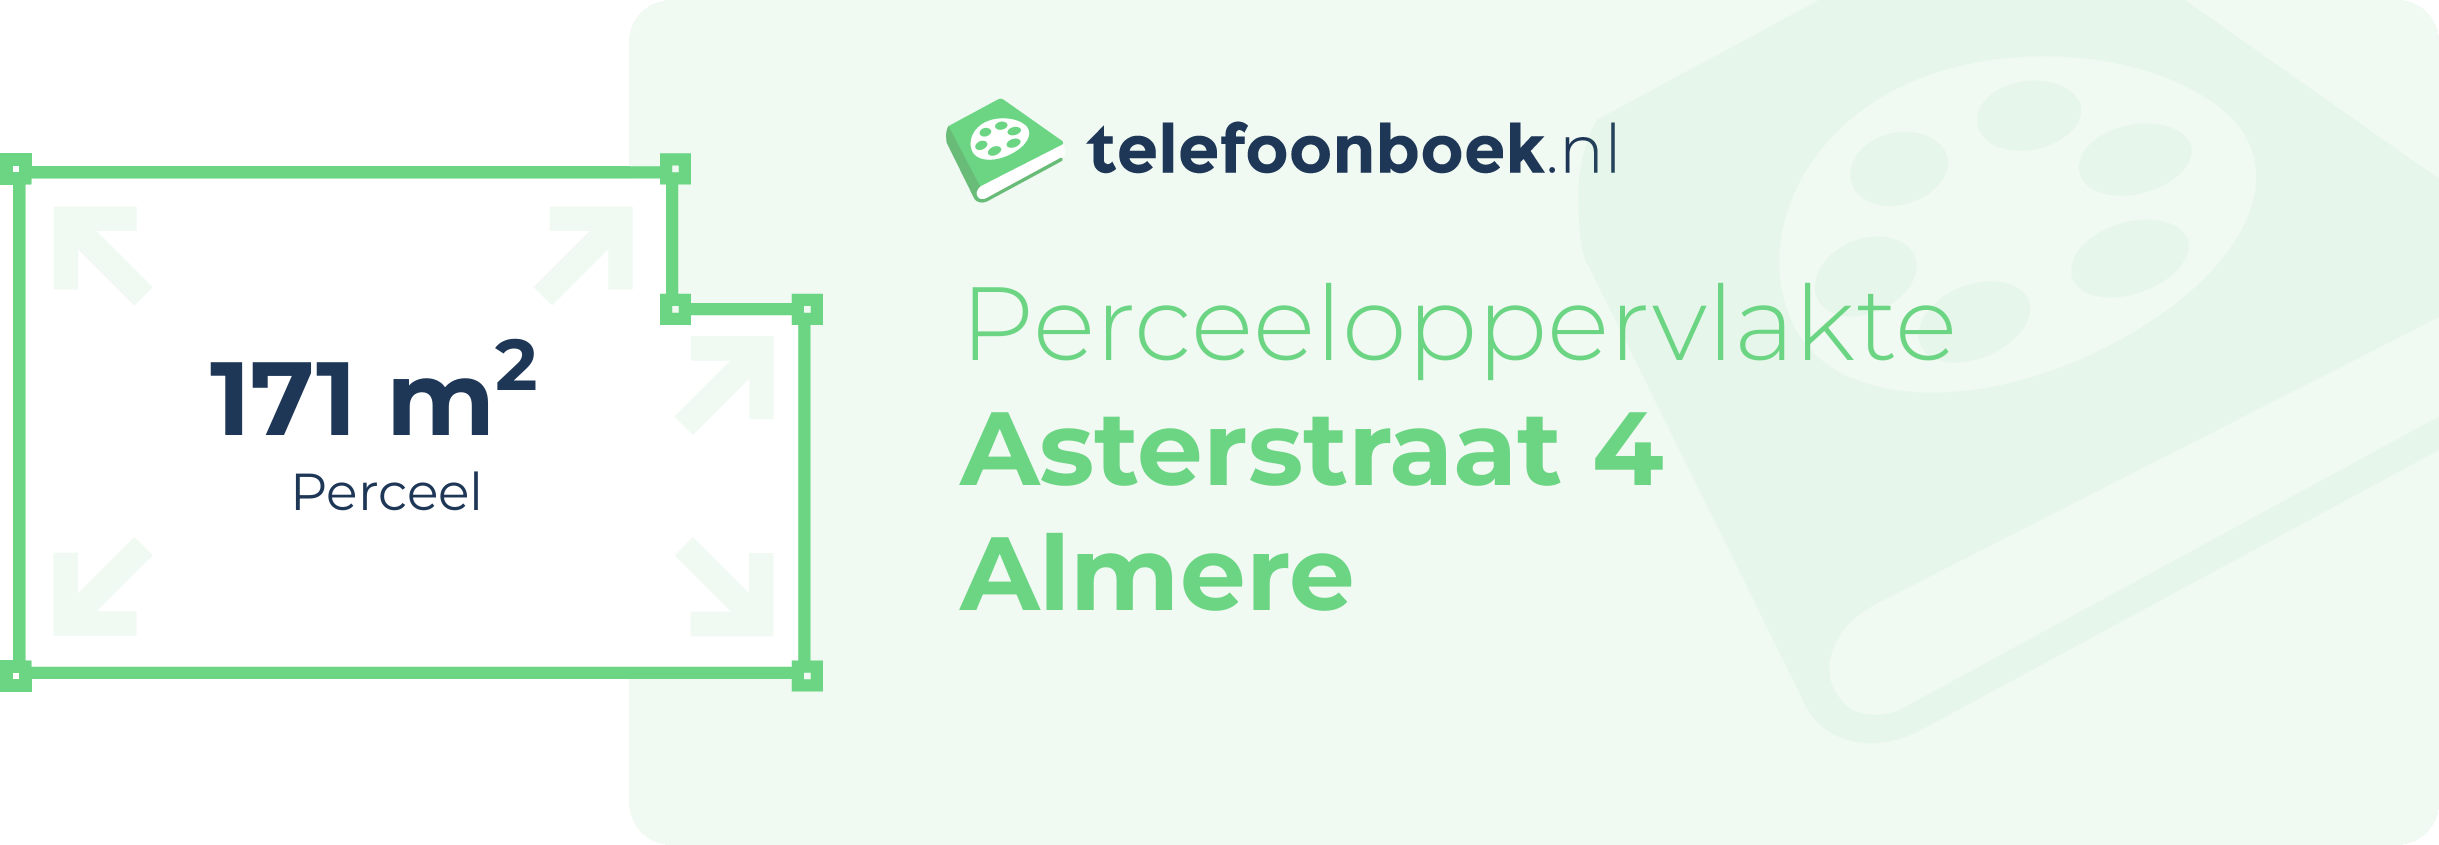 Perceeloppervlakte Asterstraat 4 Almere